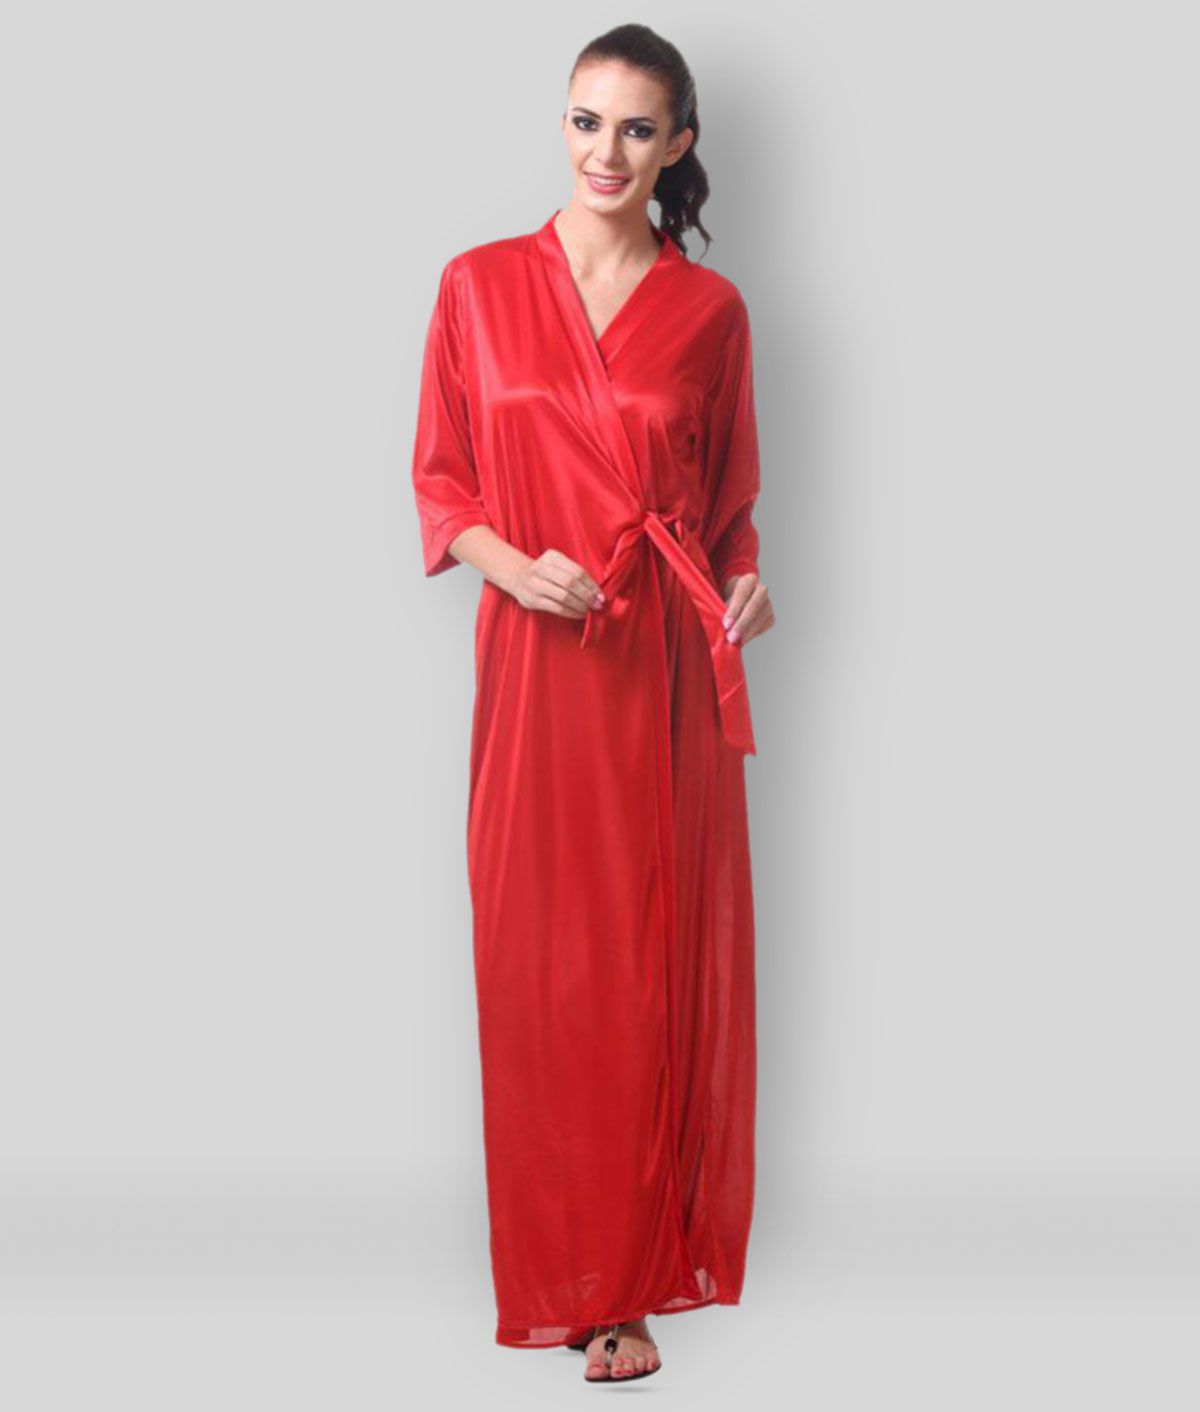     			Affair - Red Satin Women's Nightwear Nighty & Night Gowns ( Pack of 1 )